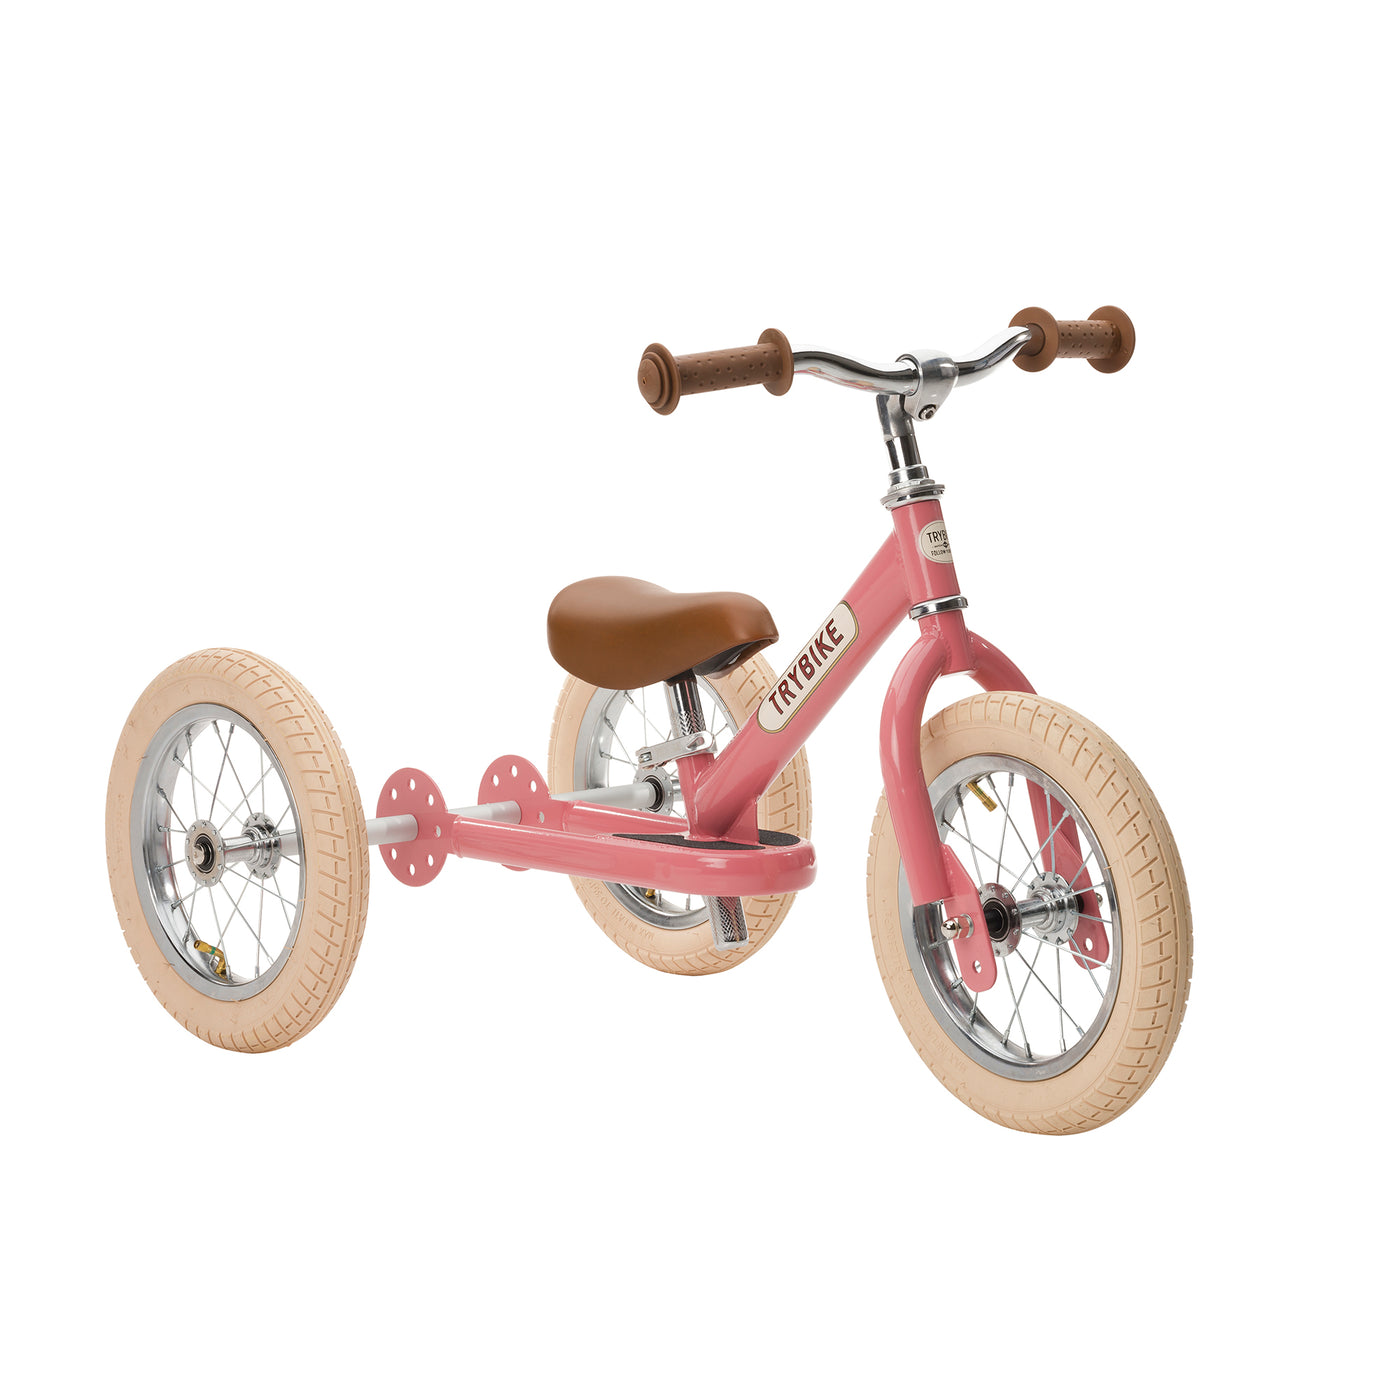 Trybike balancecykel, trehjulet + tohjulet vintage rosa